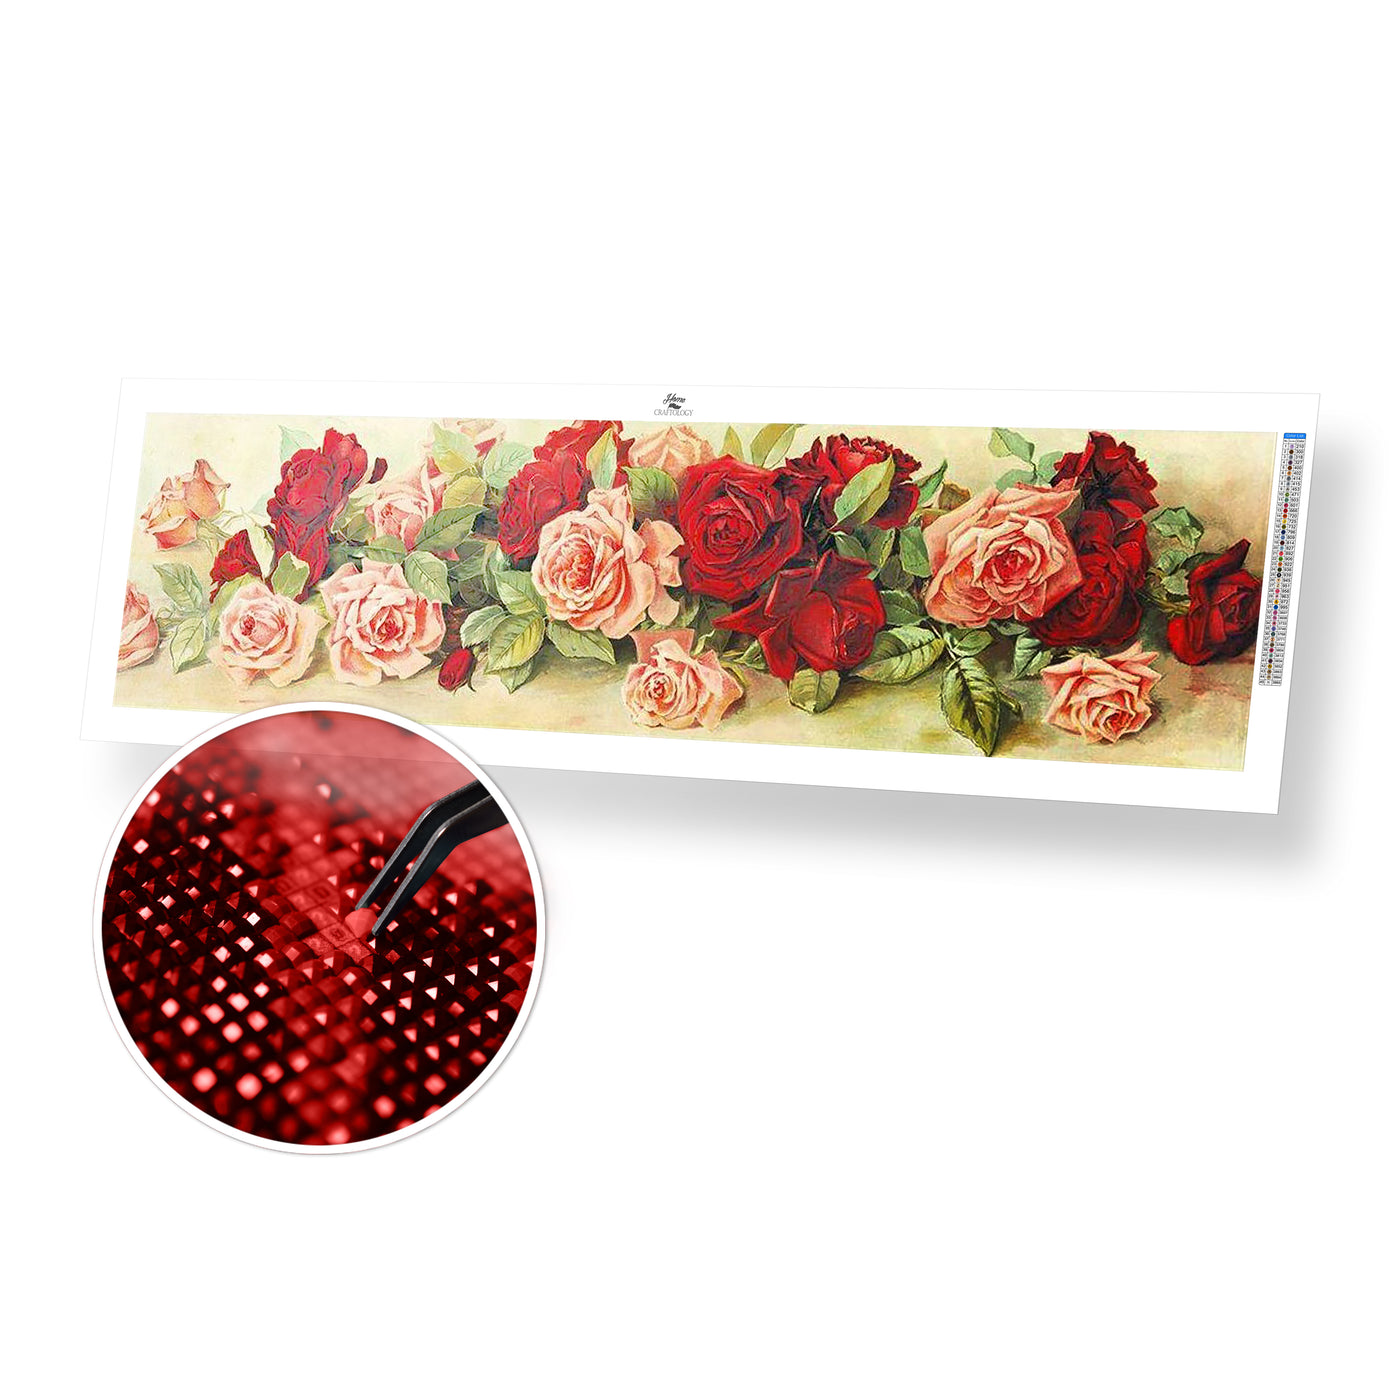 Bed of Roses - Premium Diamond Painting Kit